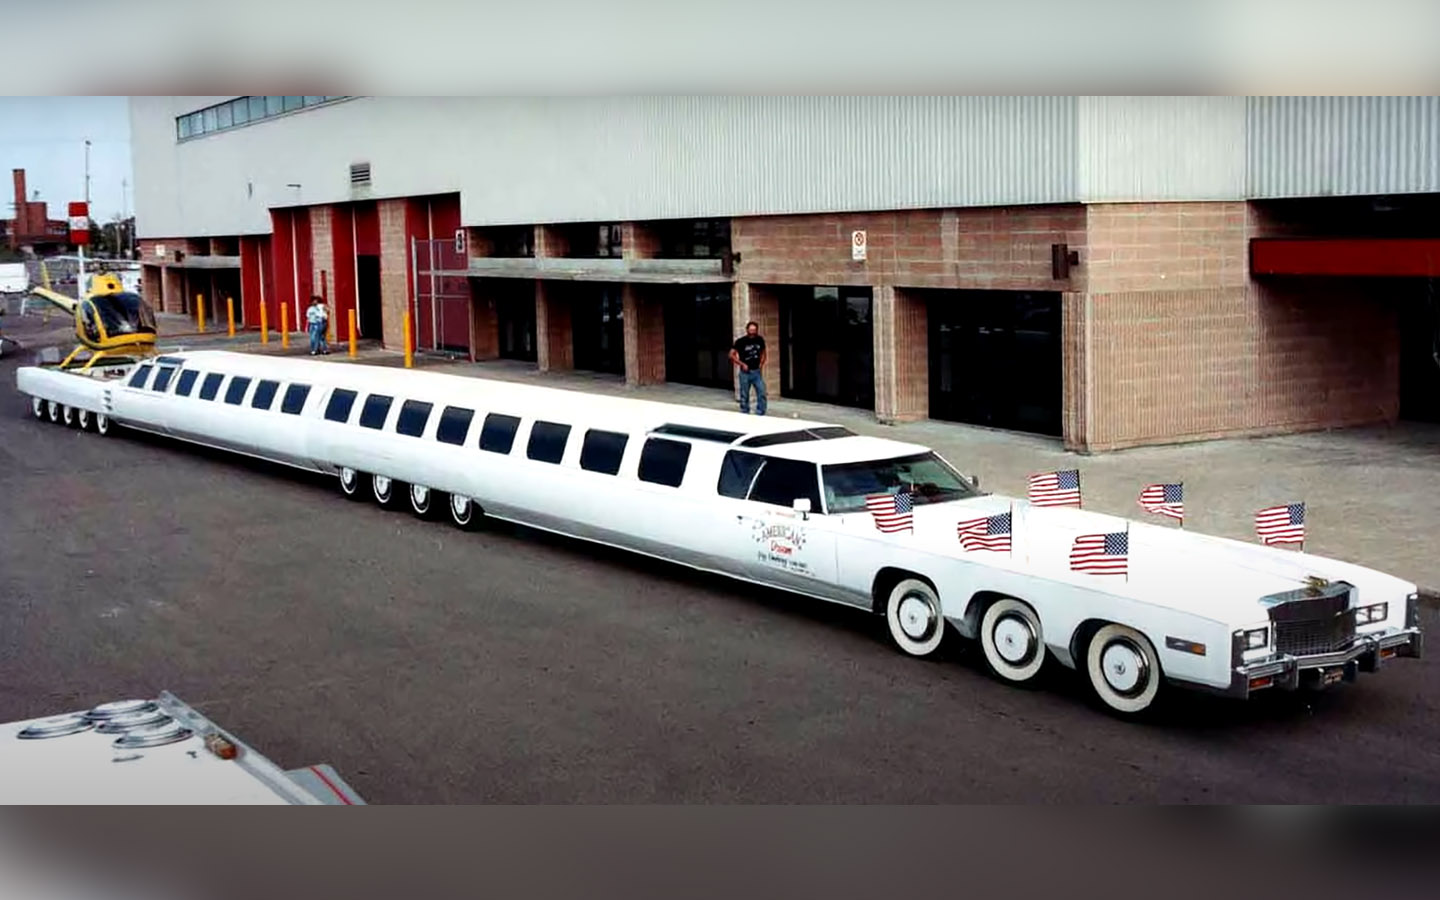 The American Dream, the longest limousine